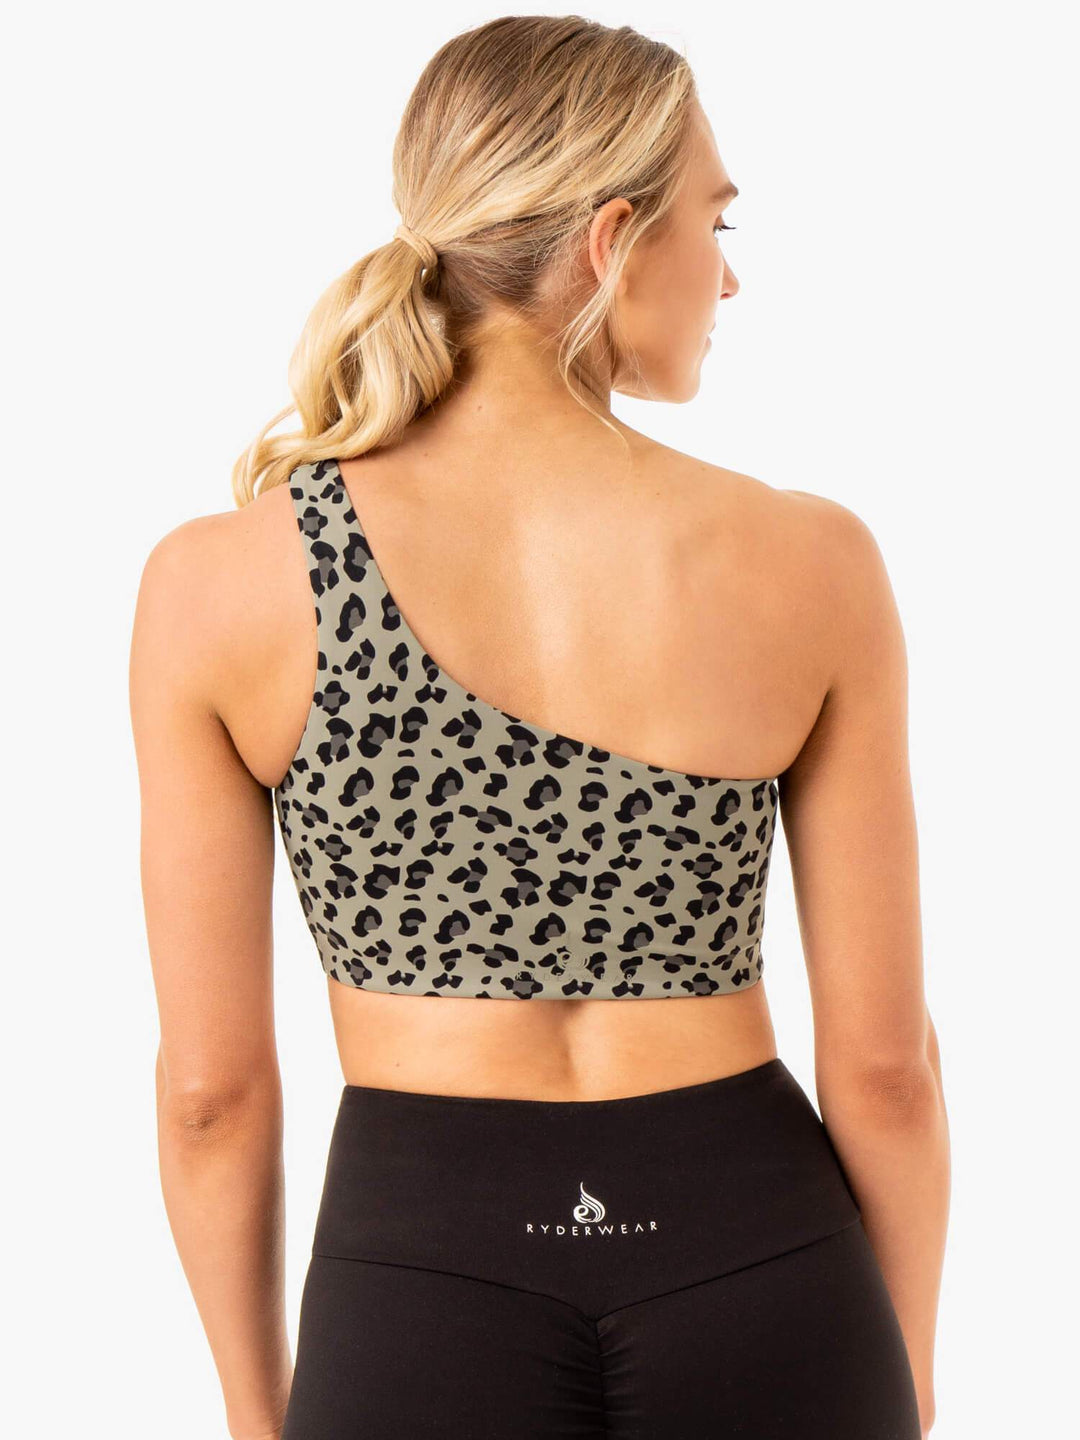 Adapt One Shoulder Sports Bra - Khaki Leopard Clothing Ryderwear 